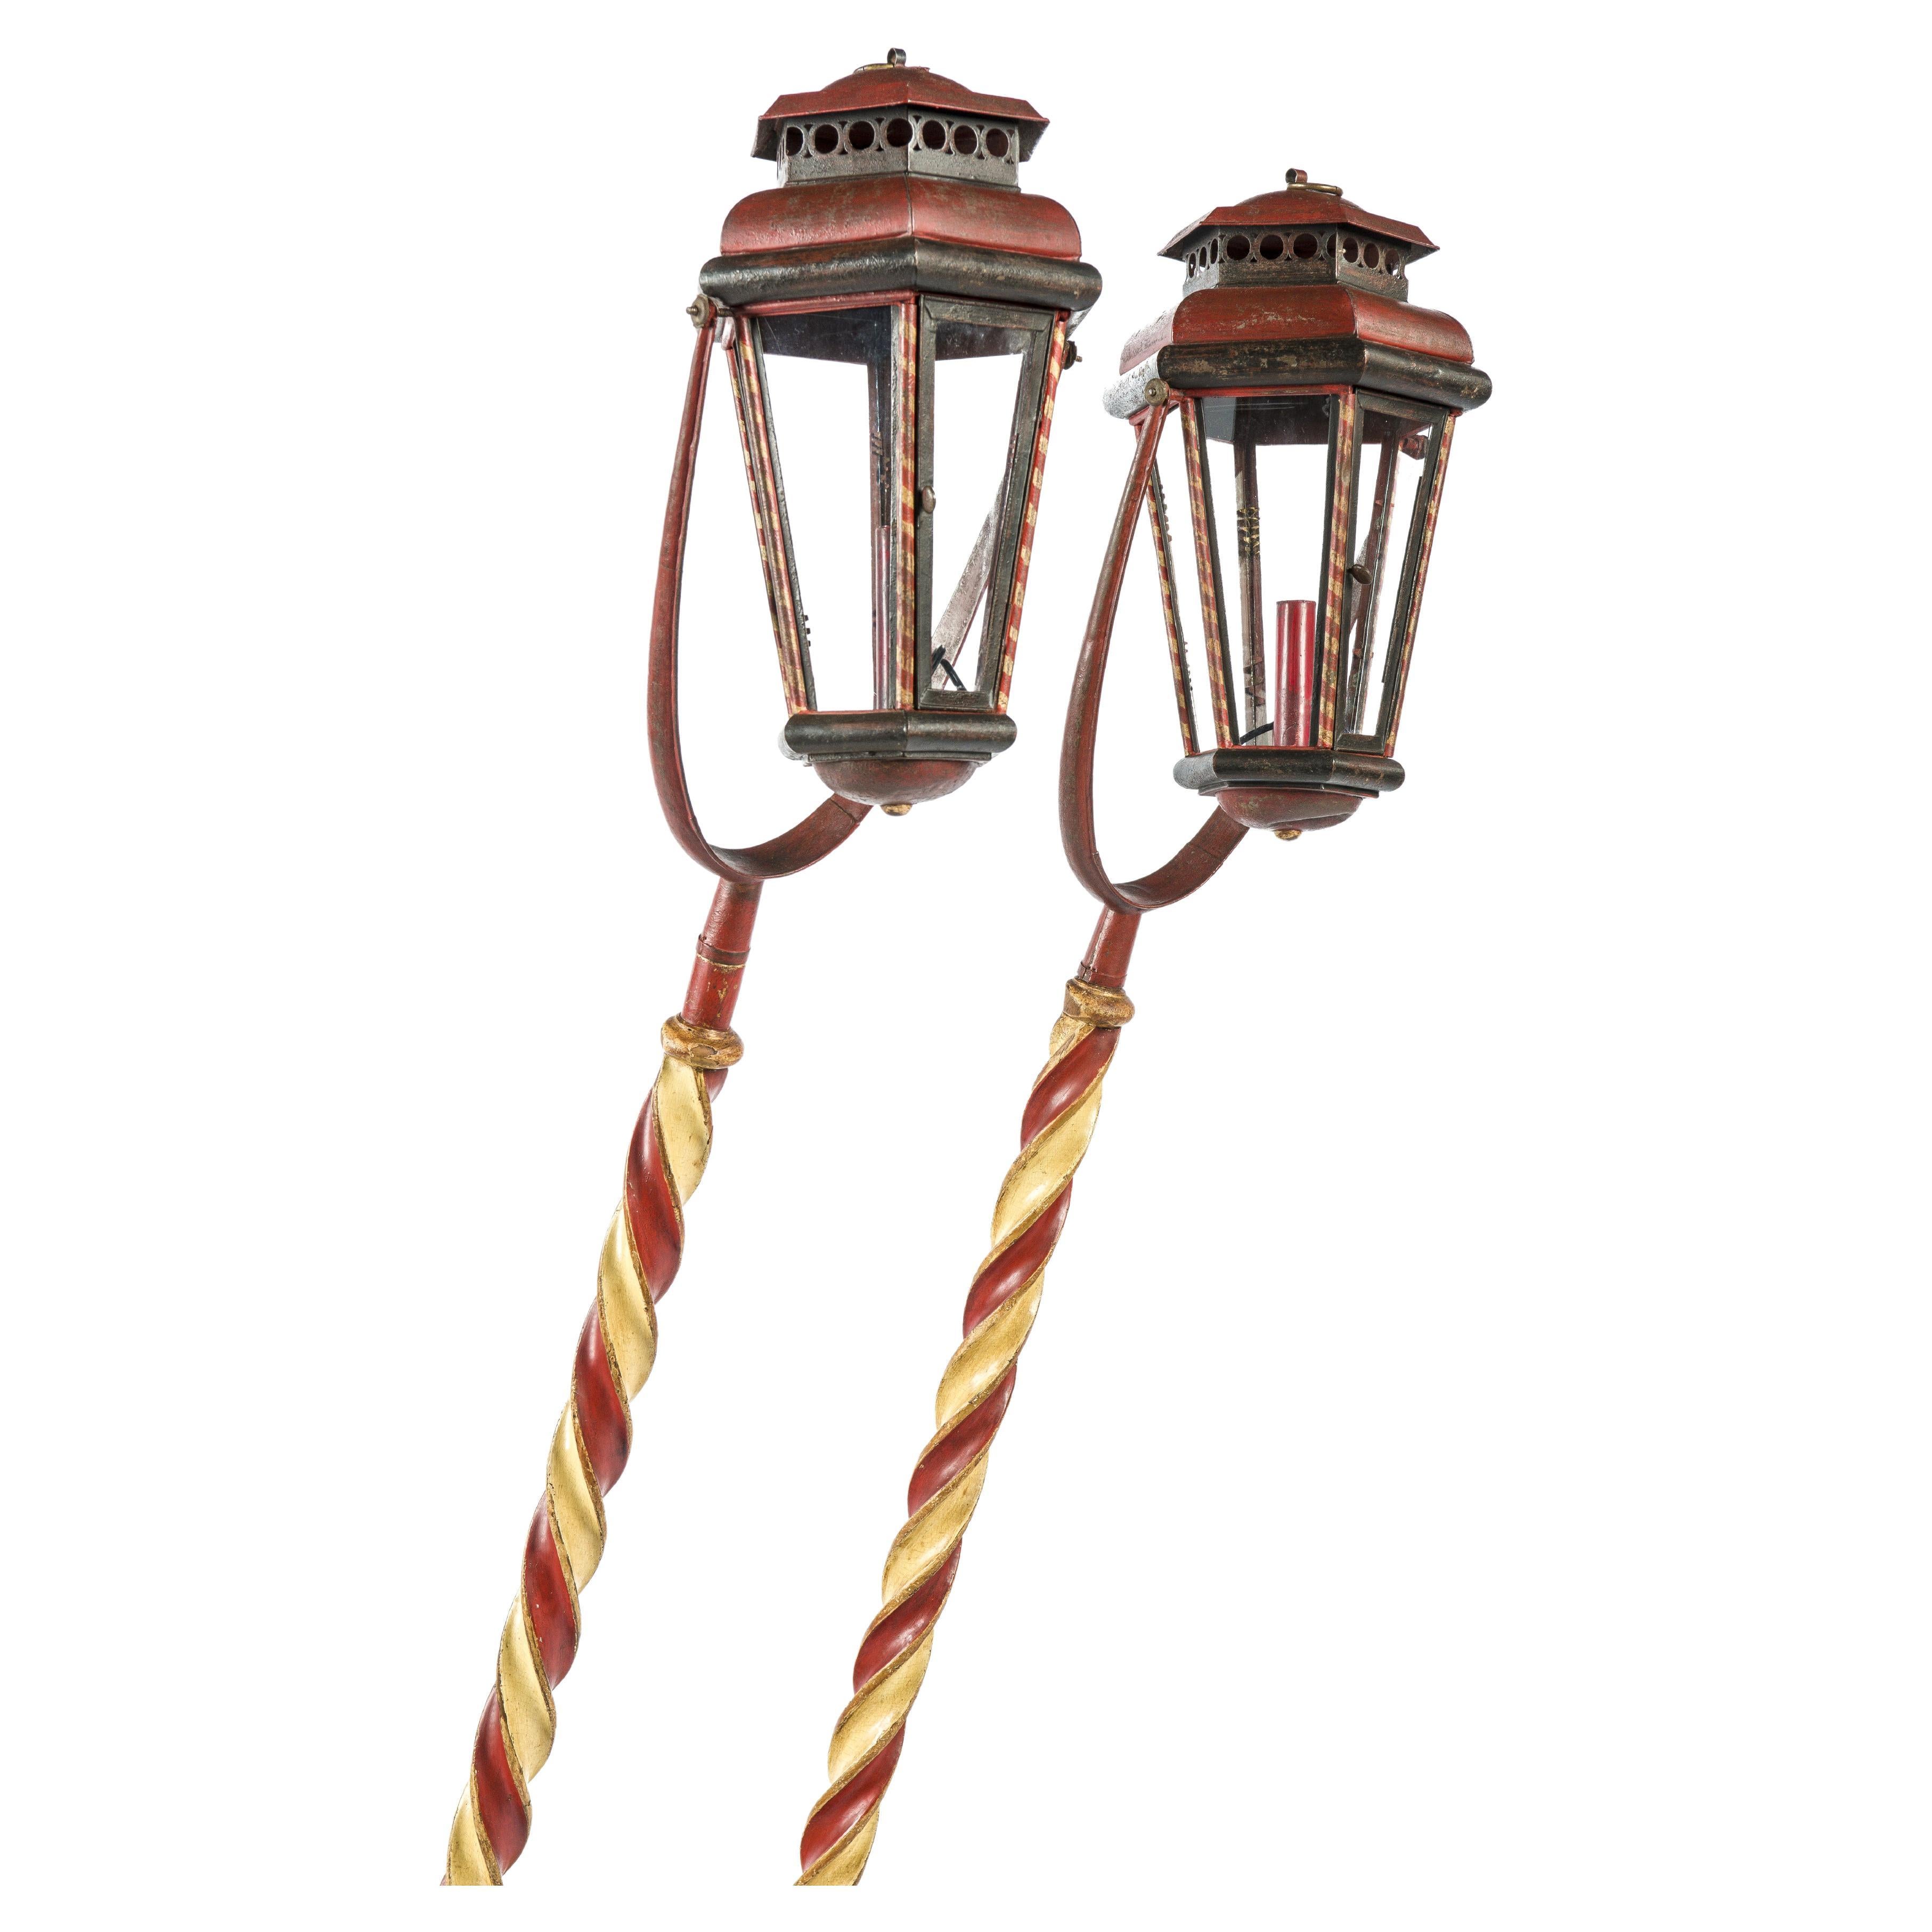 Antique 19th-Century Polychrome Italian Venetian Gondola Lanterns